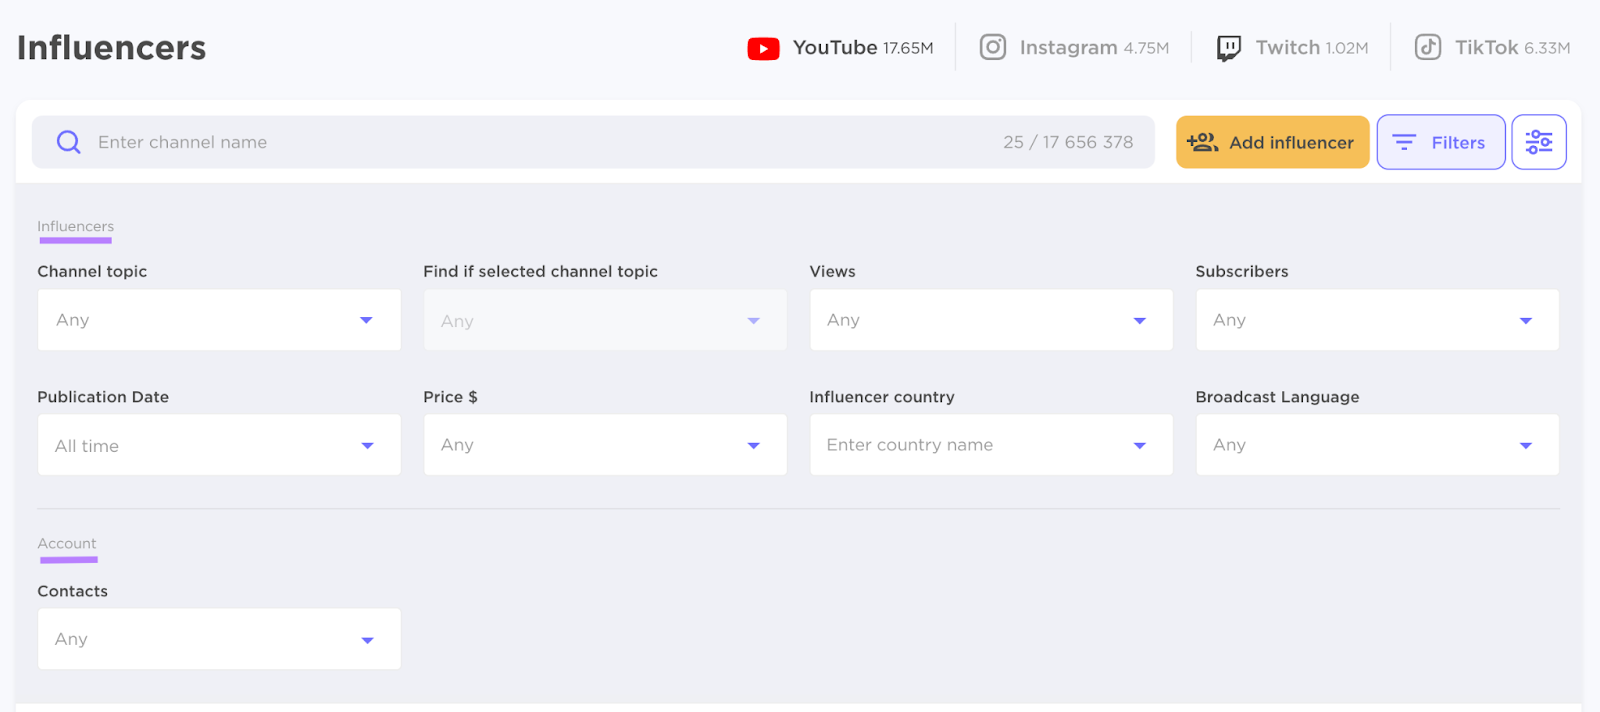 Influencer filtering of YouTube influencers using Semrush's Influencer Analytics tool